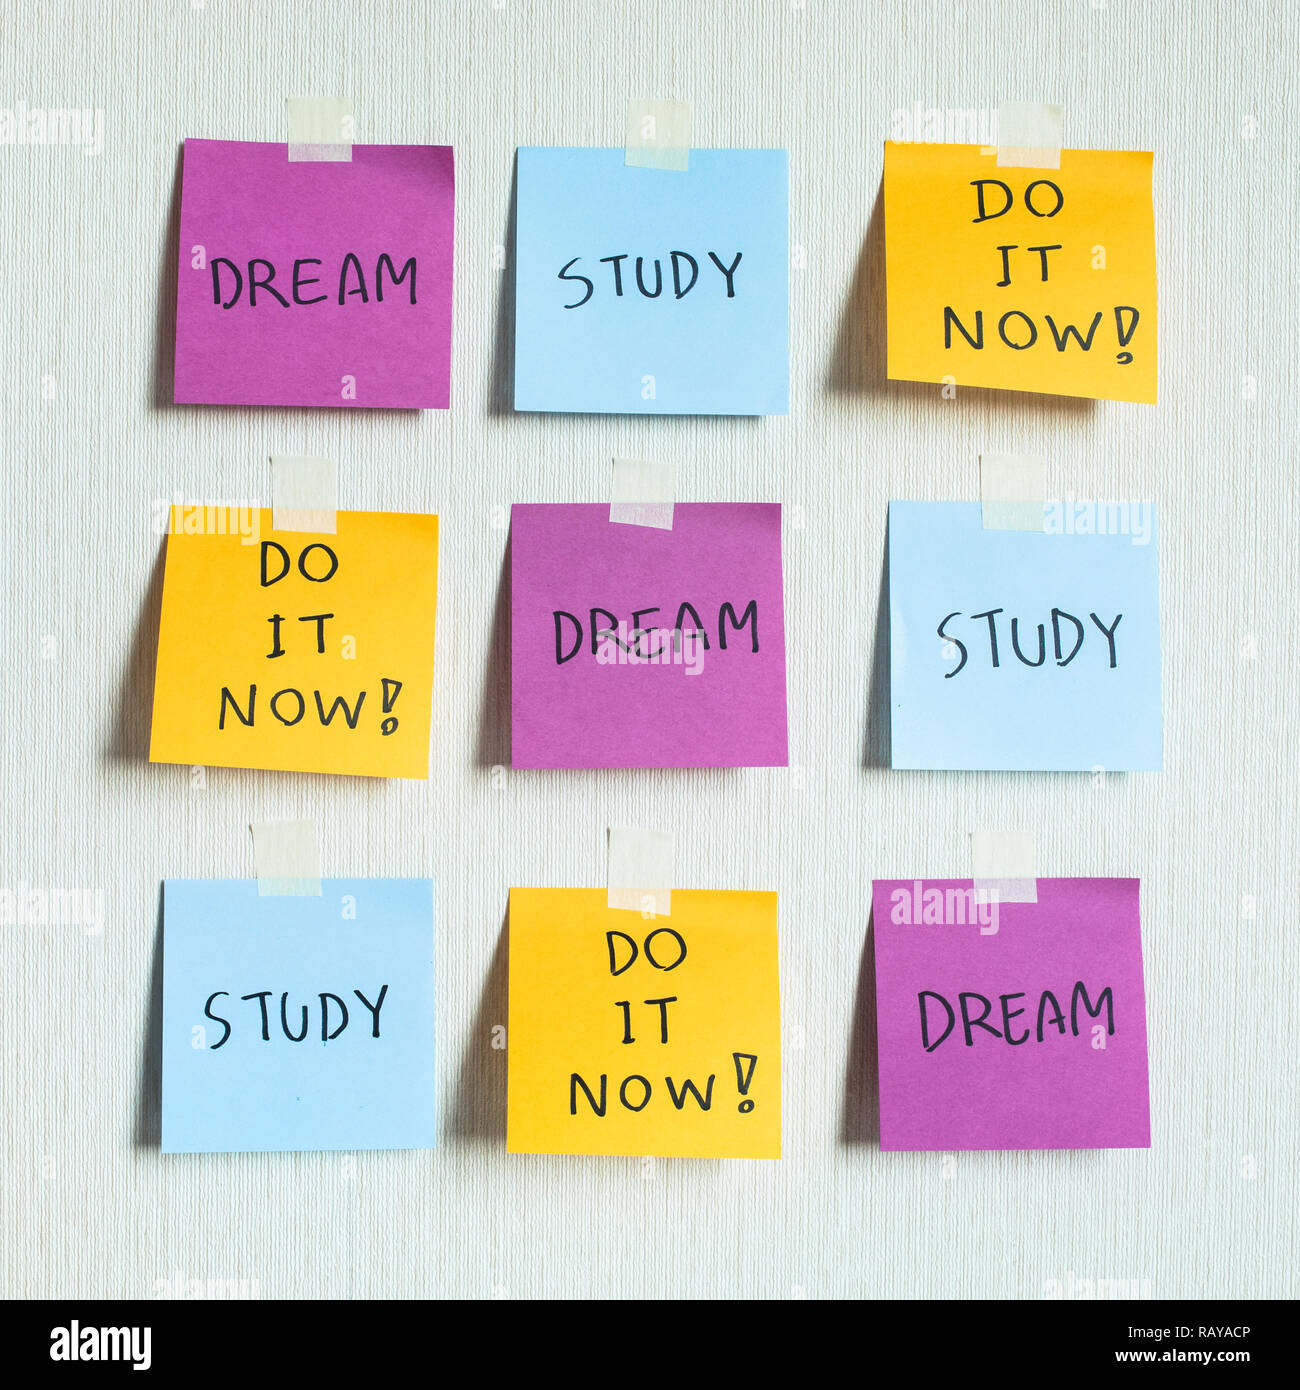 Study Motivation Images - Free Download on Freepik